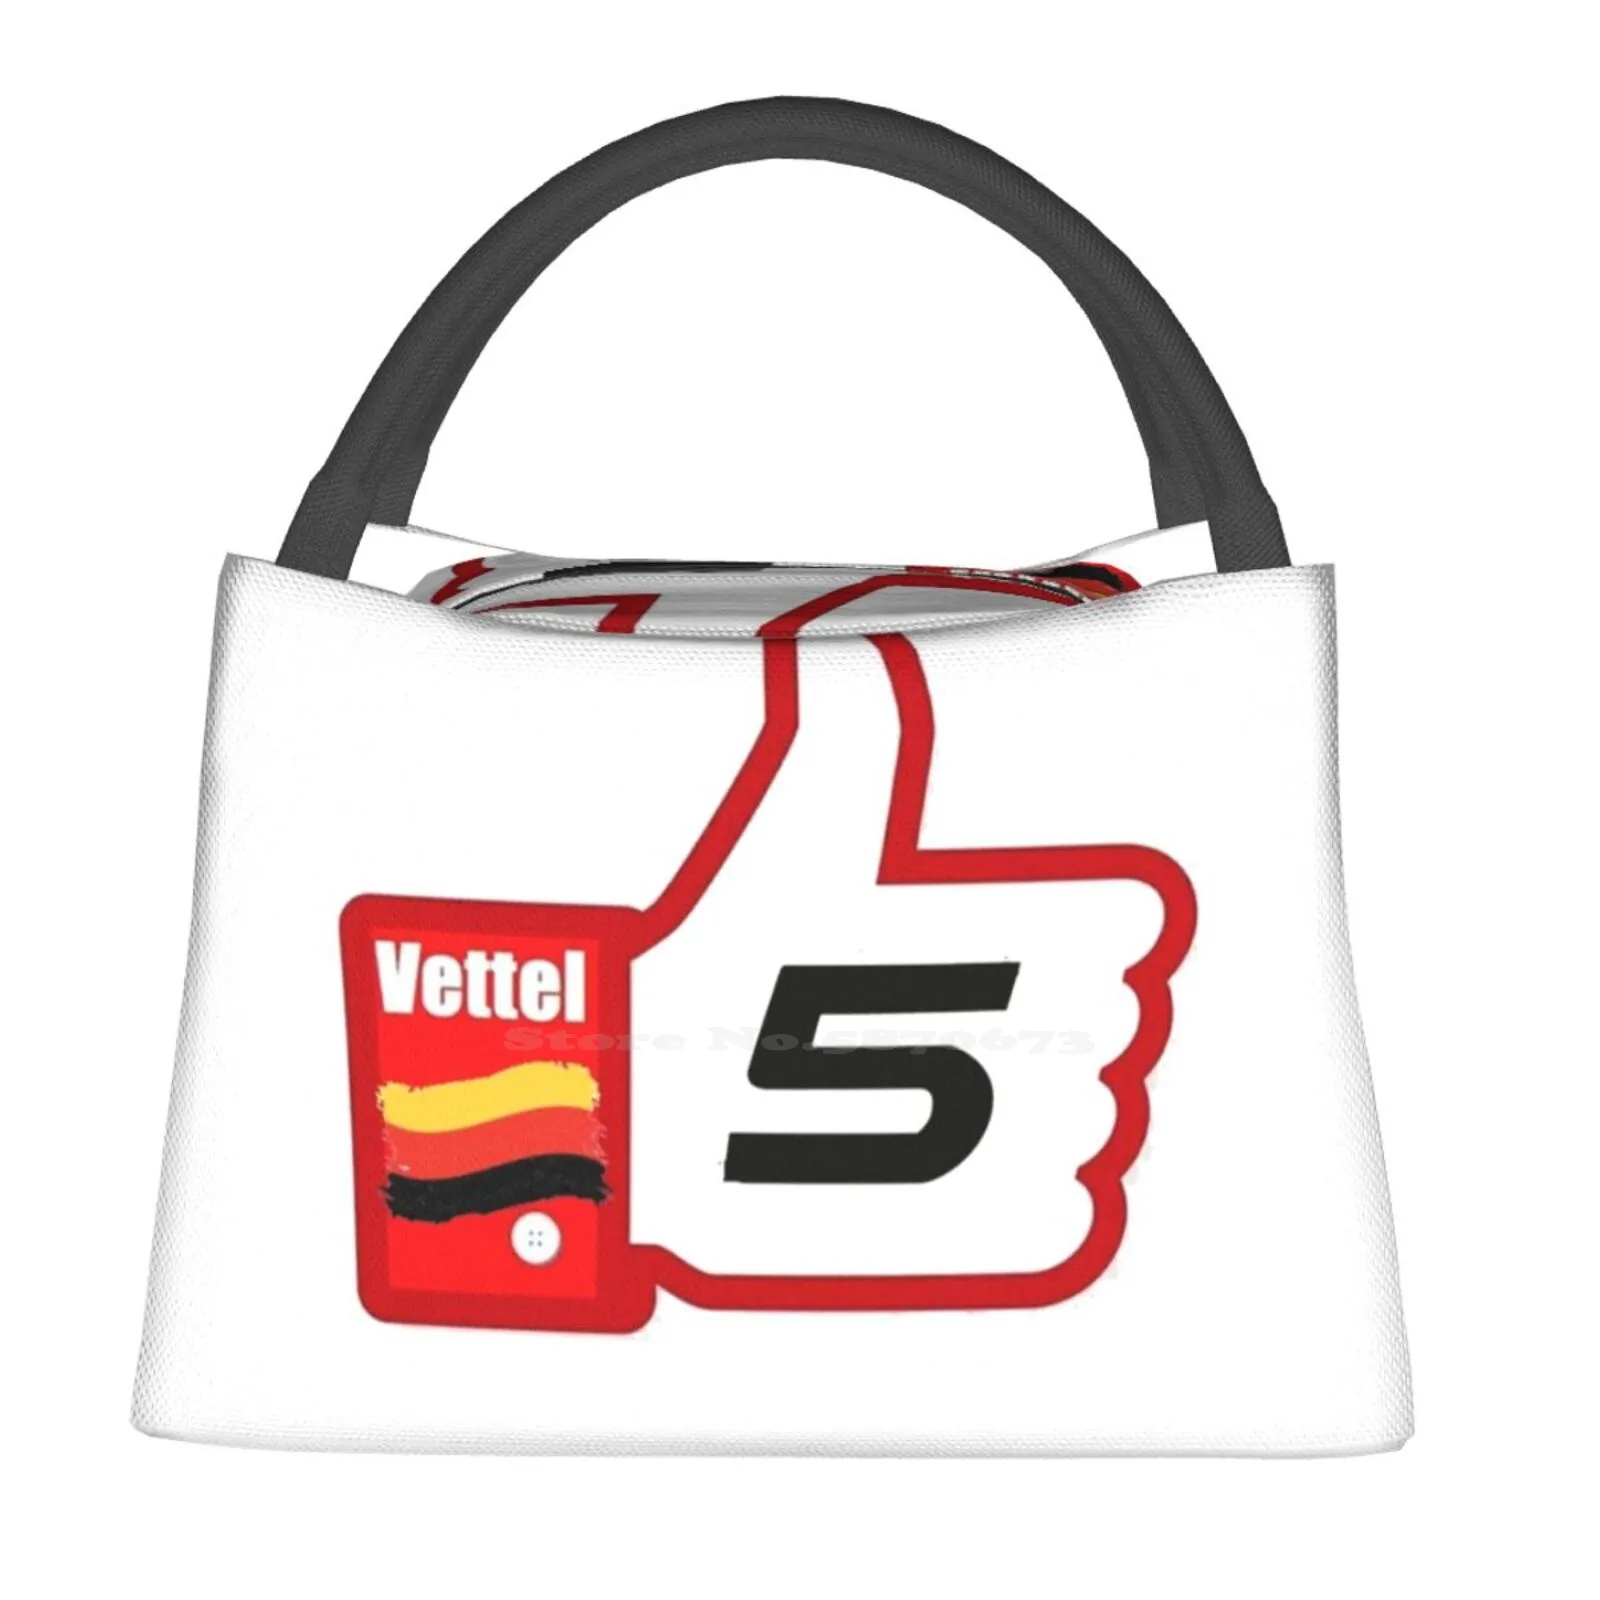 

Теплоизоляционный пакет Seb для пальцев, сумка для хранения пищевых продуктов Seb5, себ5, Vettel, Vettel5, Vettel Sv5, Scuderia Prancinghorse, формула